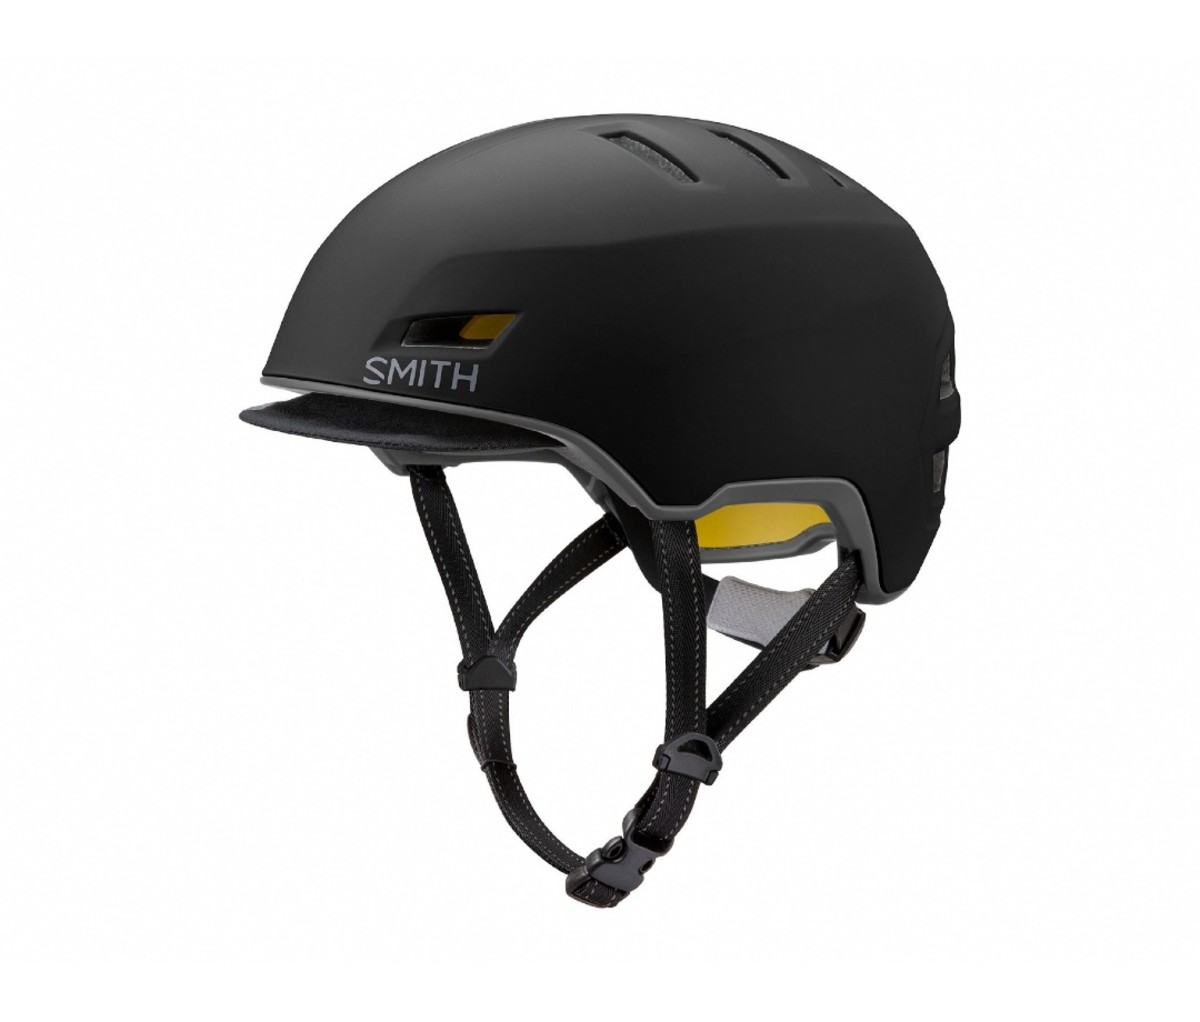 Smith Express MIPS helmet